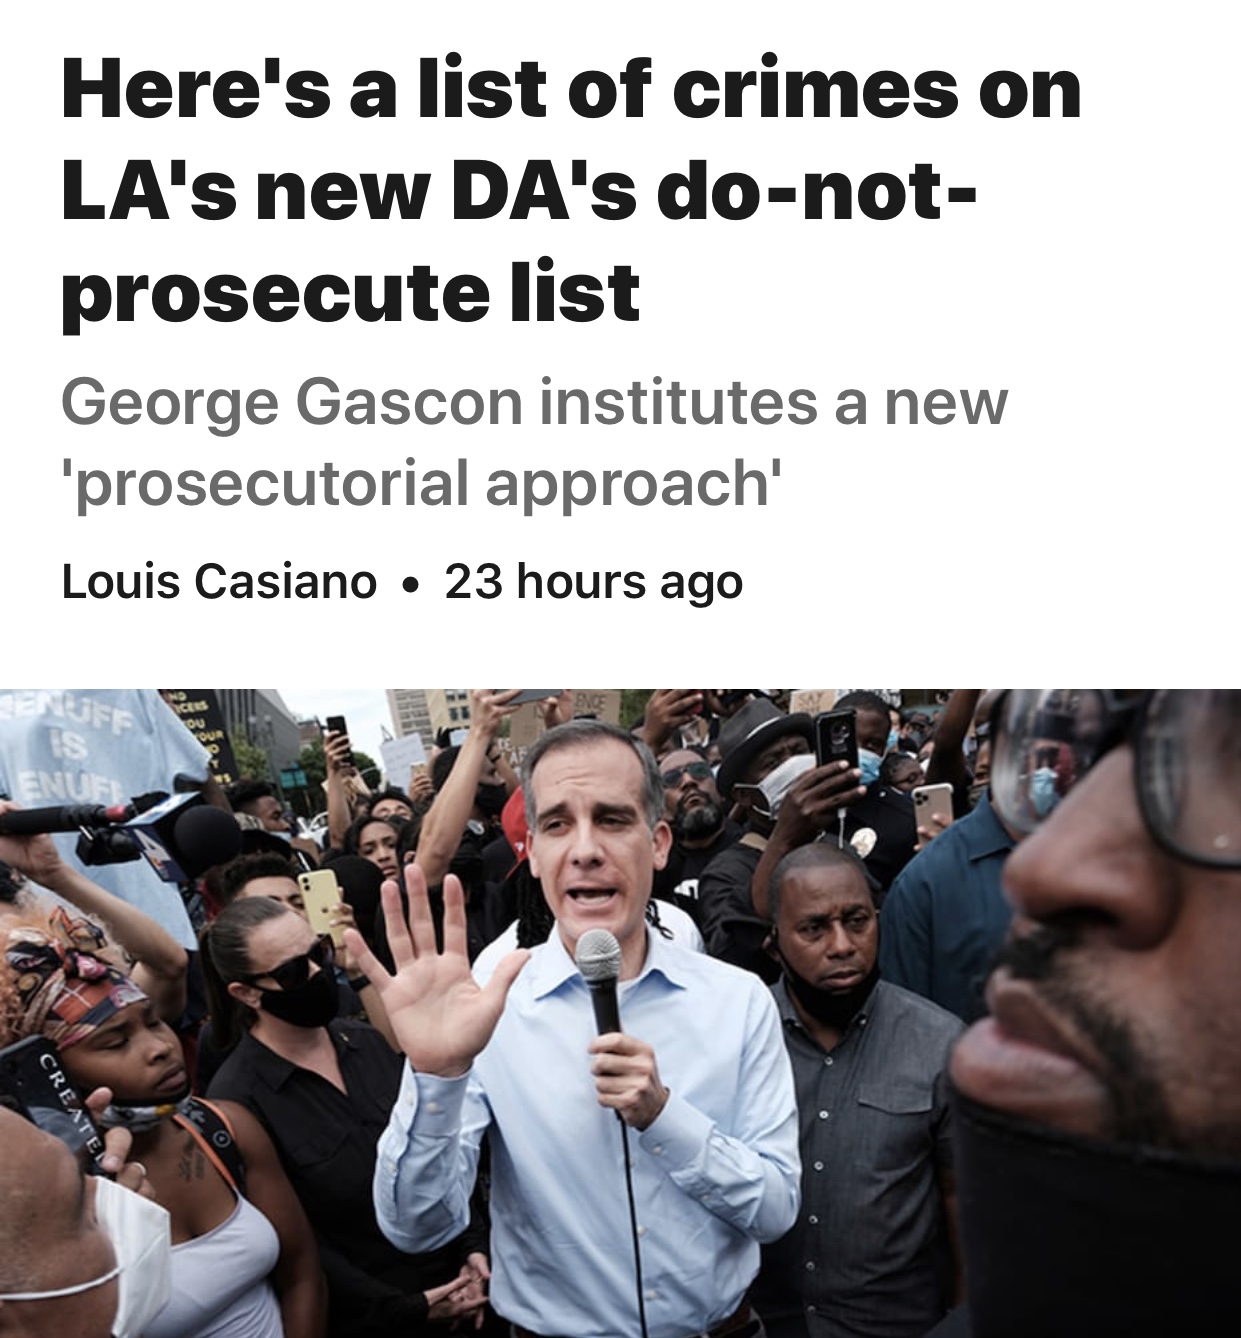 Here’s a list of crimes on LA’s new DA’s do-not-prosecute list